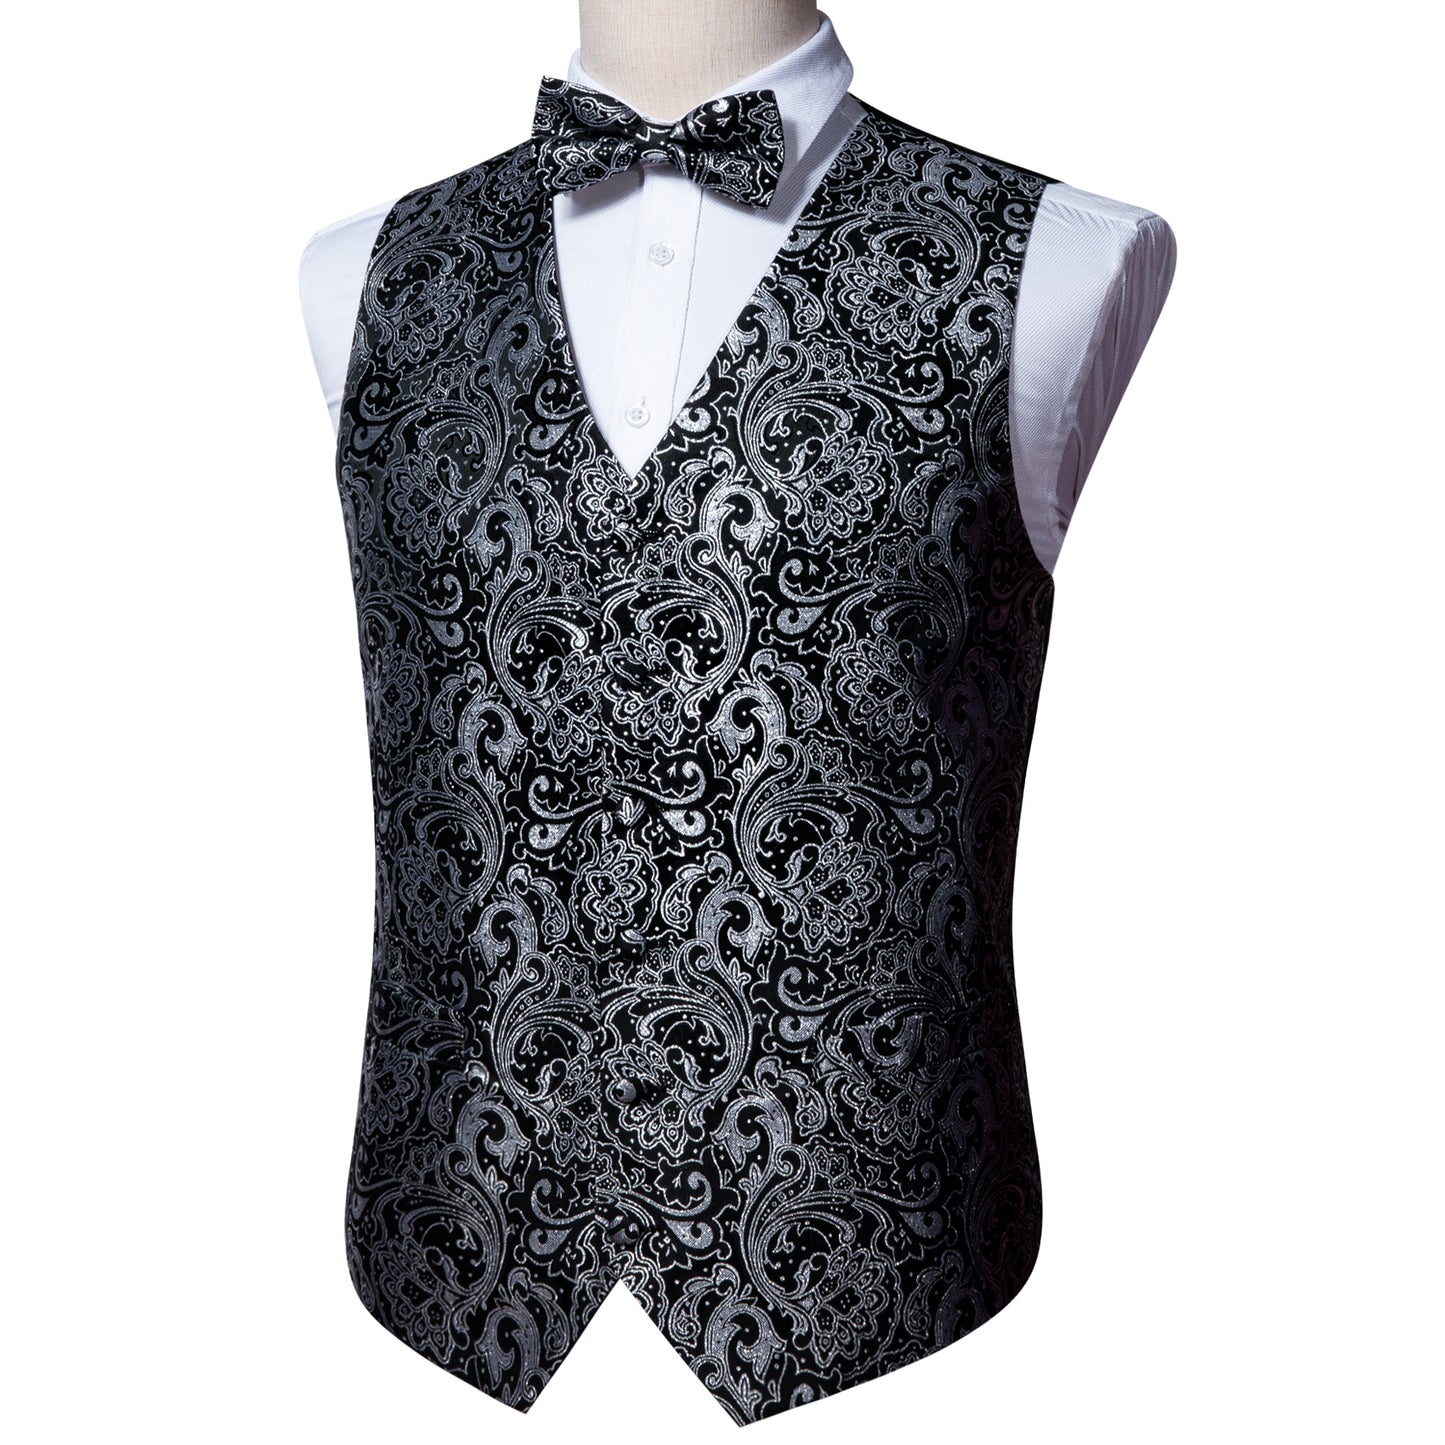 Designer Waistcoat Novelty Bowtie Vest Shiny French Fan Print Charcoal Grey